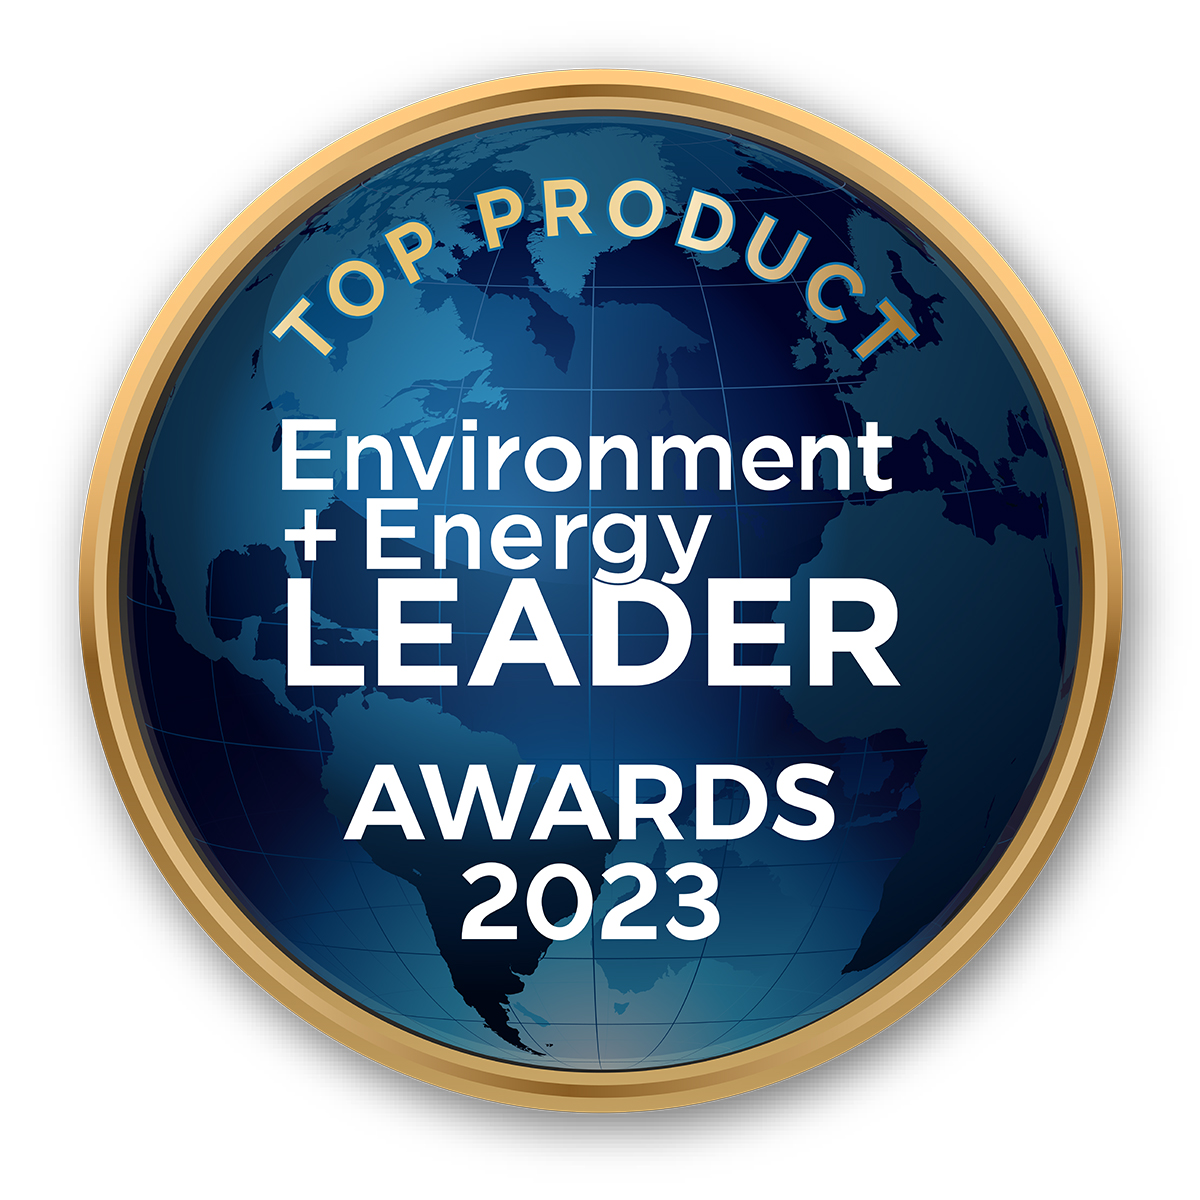 Environment + Energy Leader Awards 2023 Badge